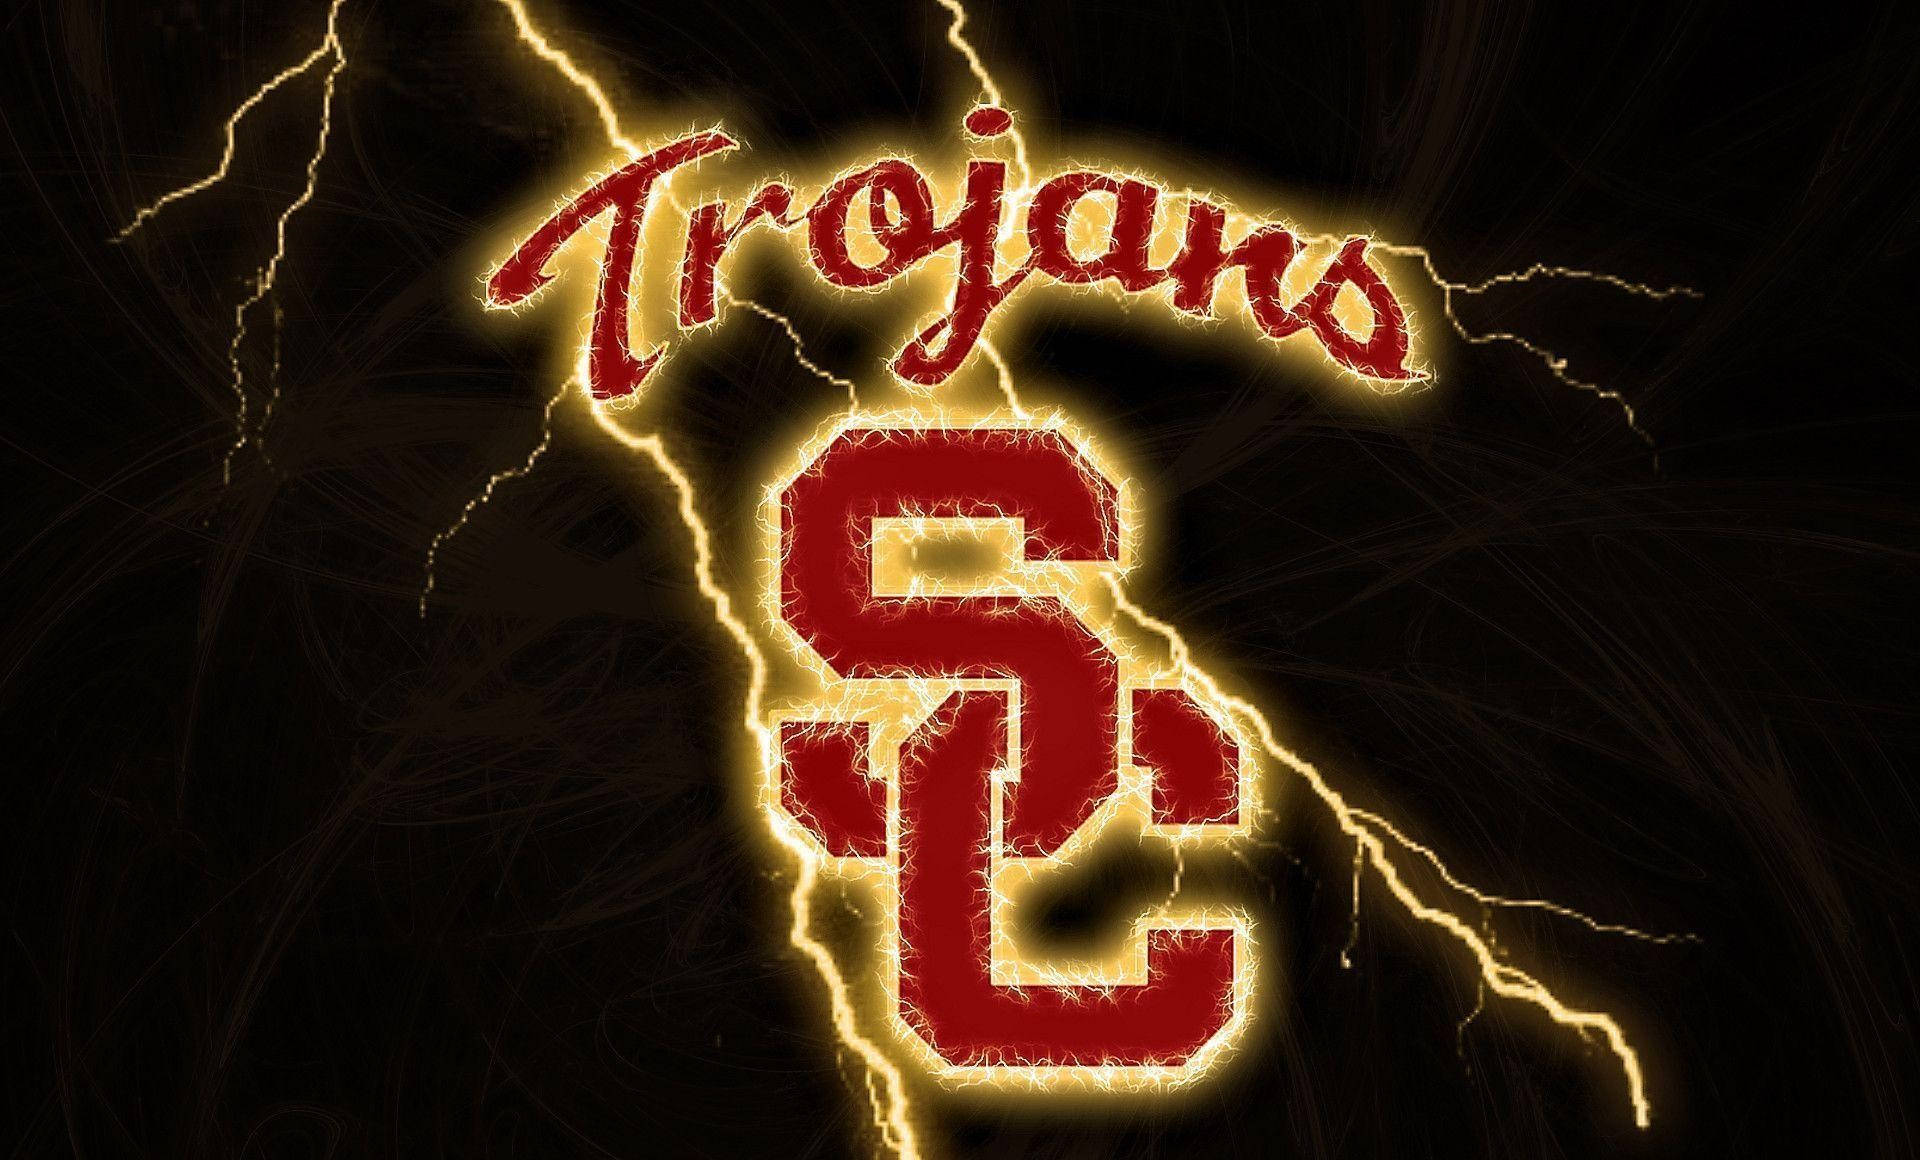 University Of Southern California Trojans Lightning Wallpaper